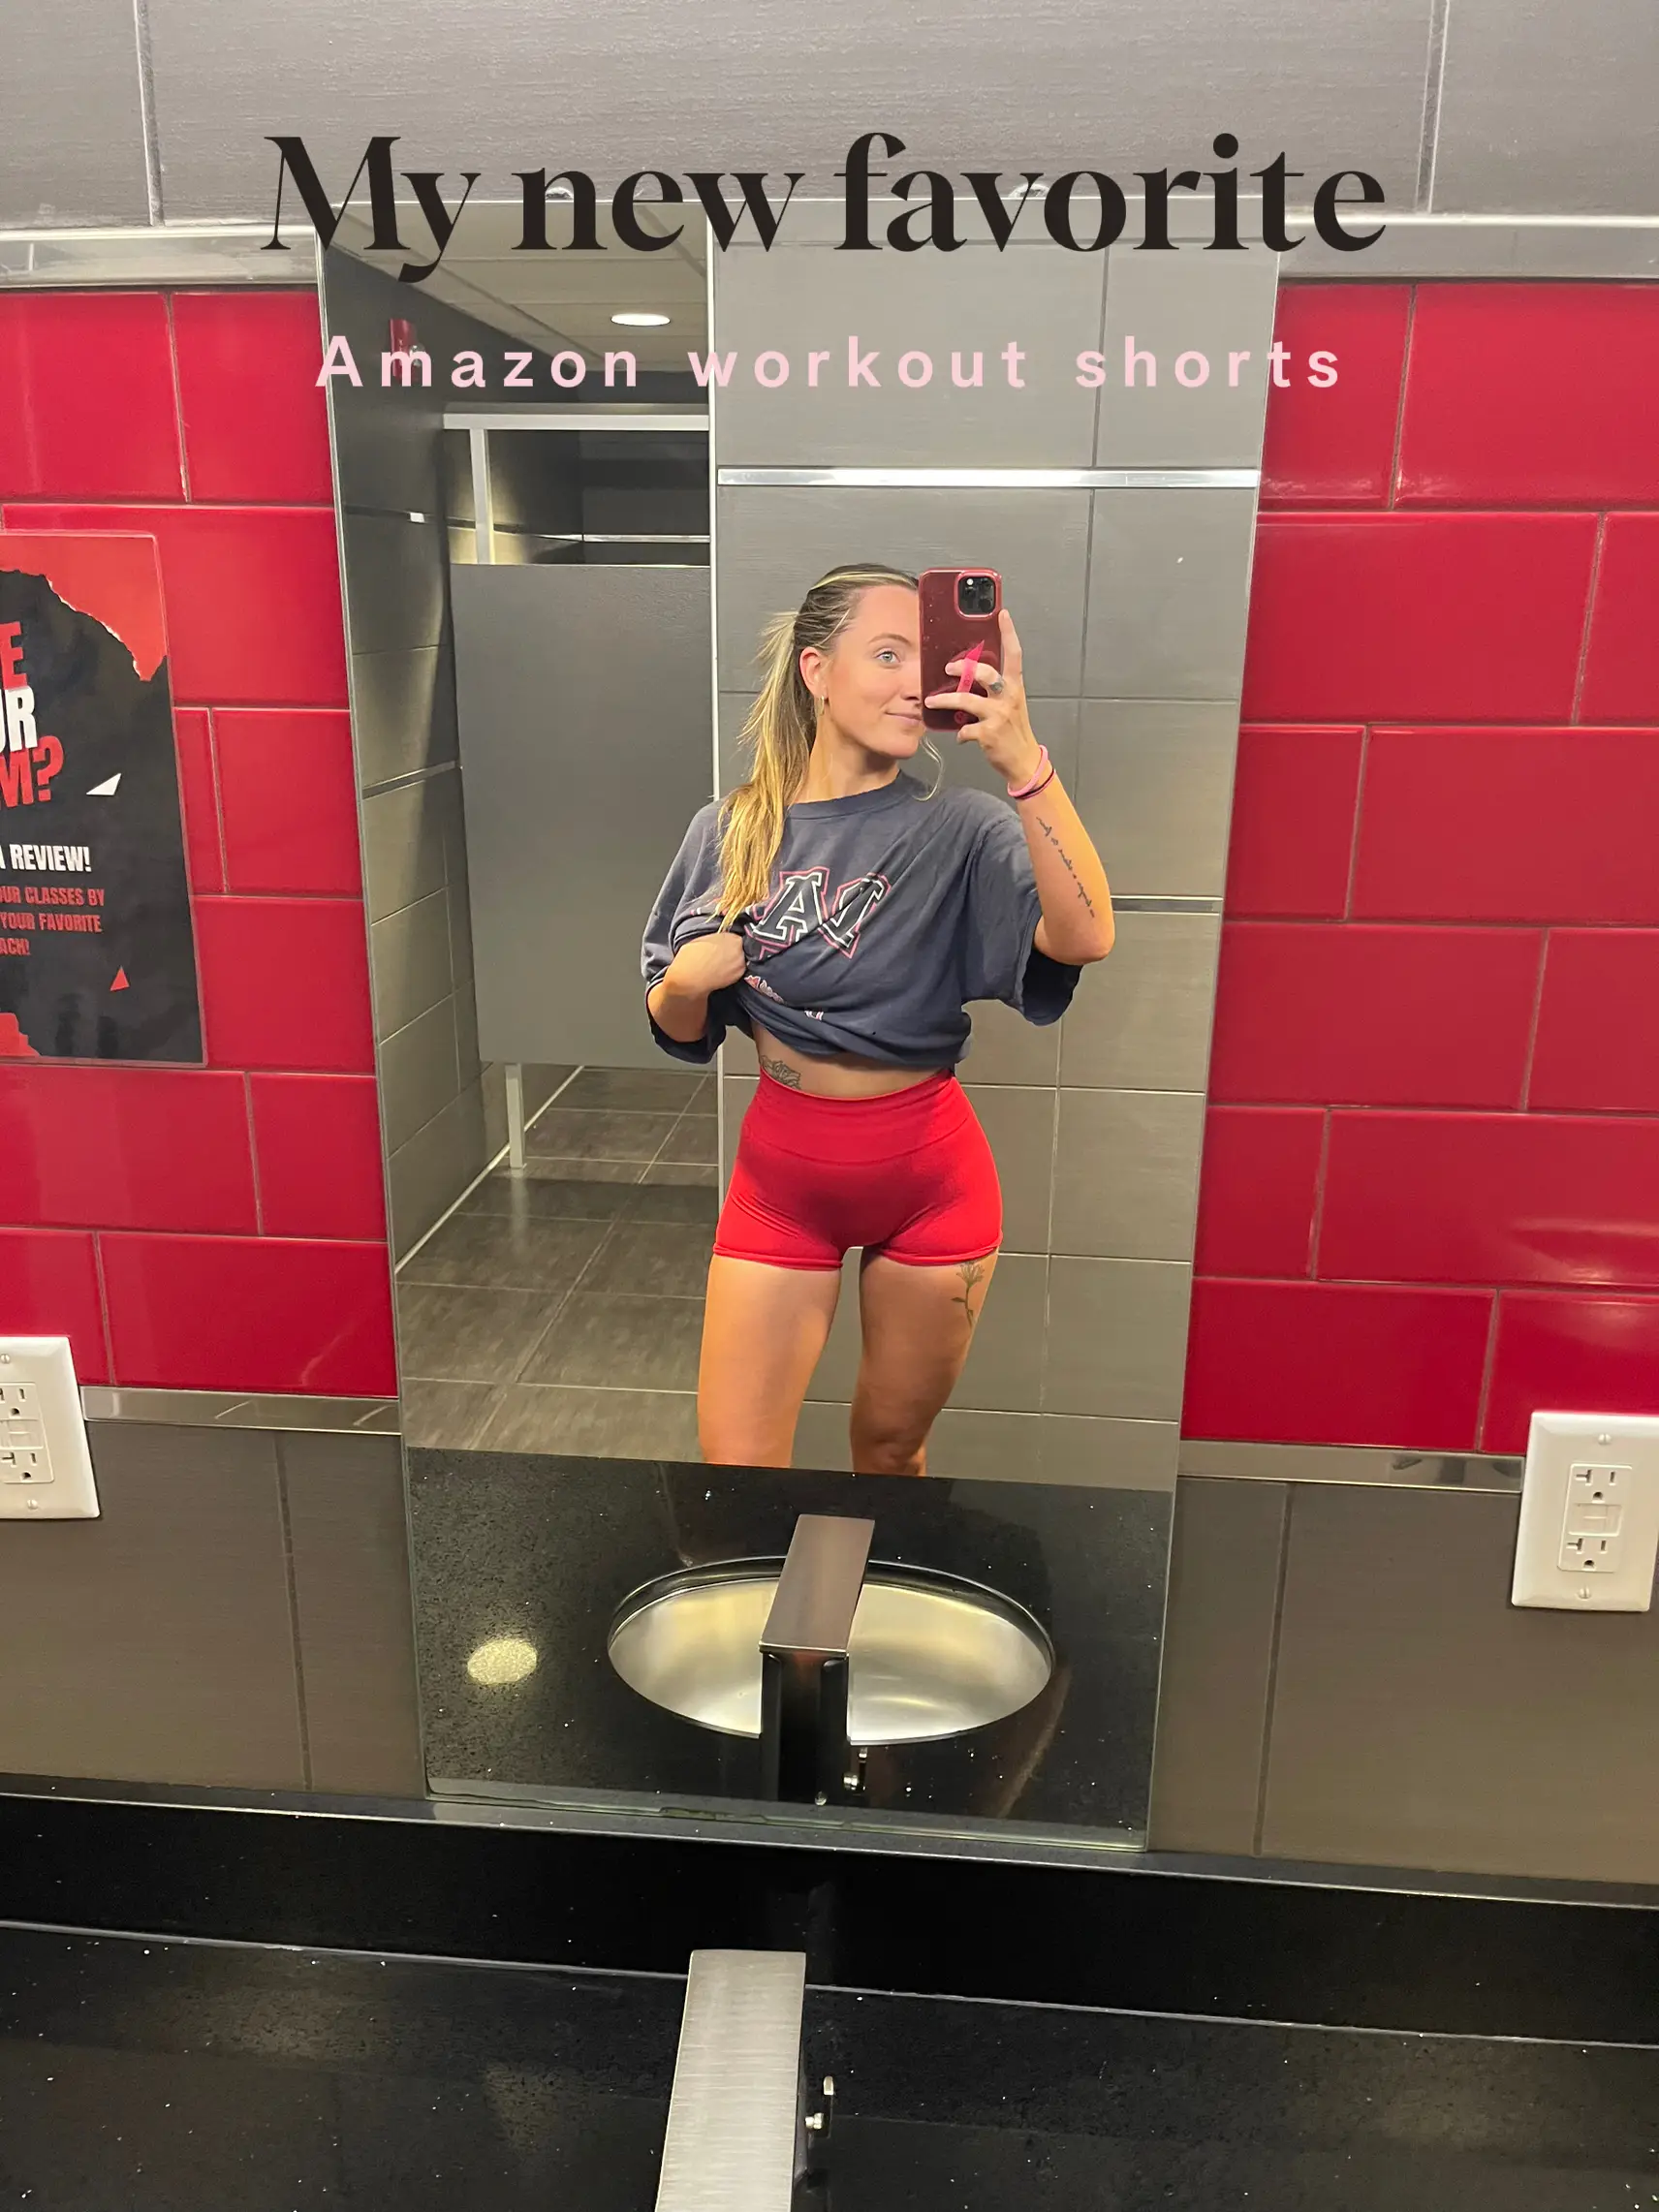  AUROLA Dream Collection Workout Shorts For Women